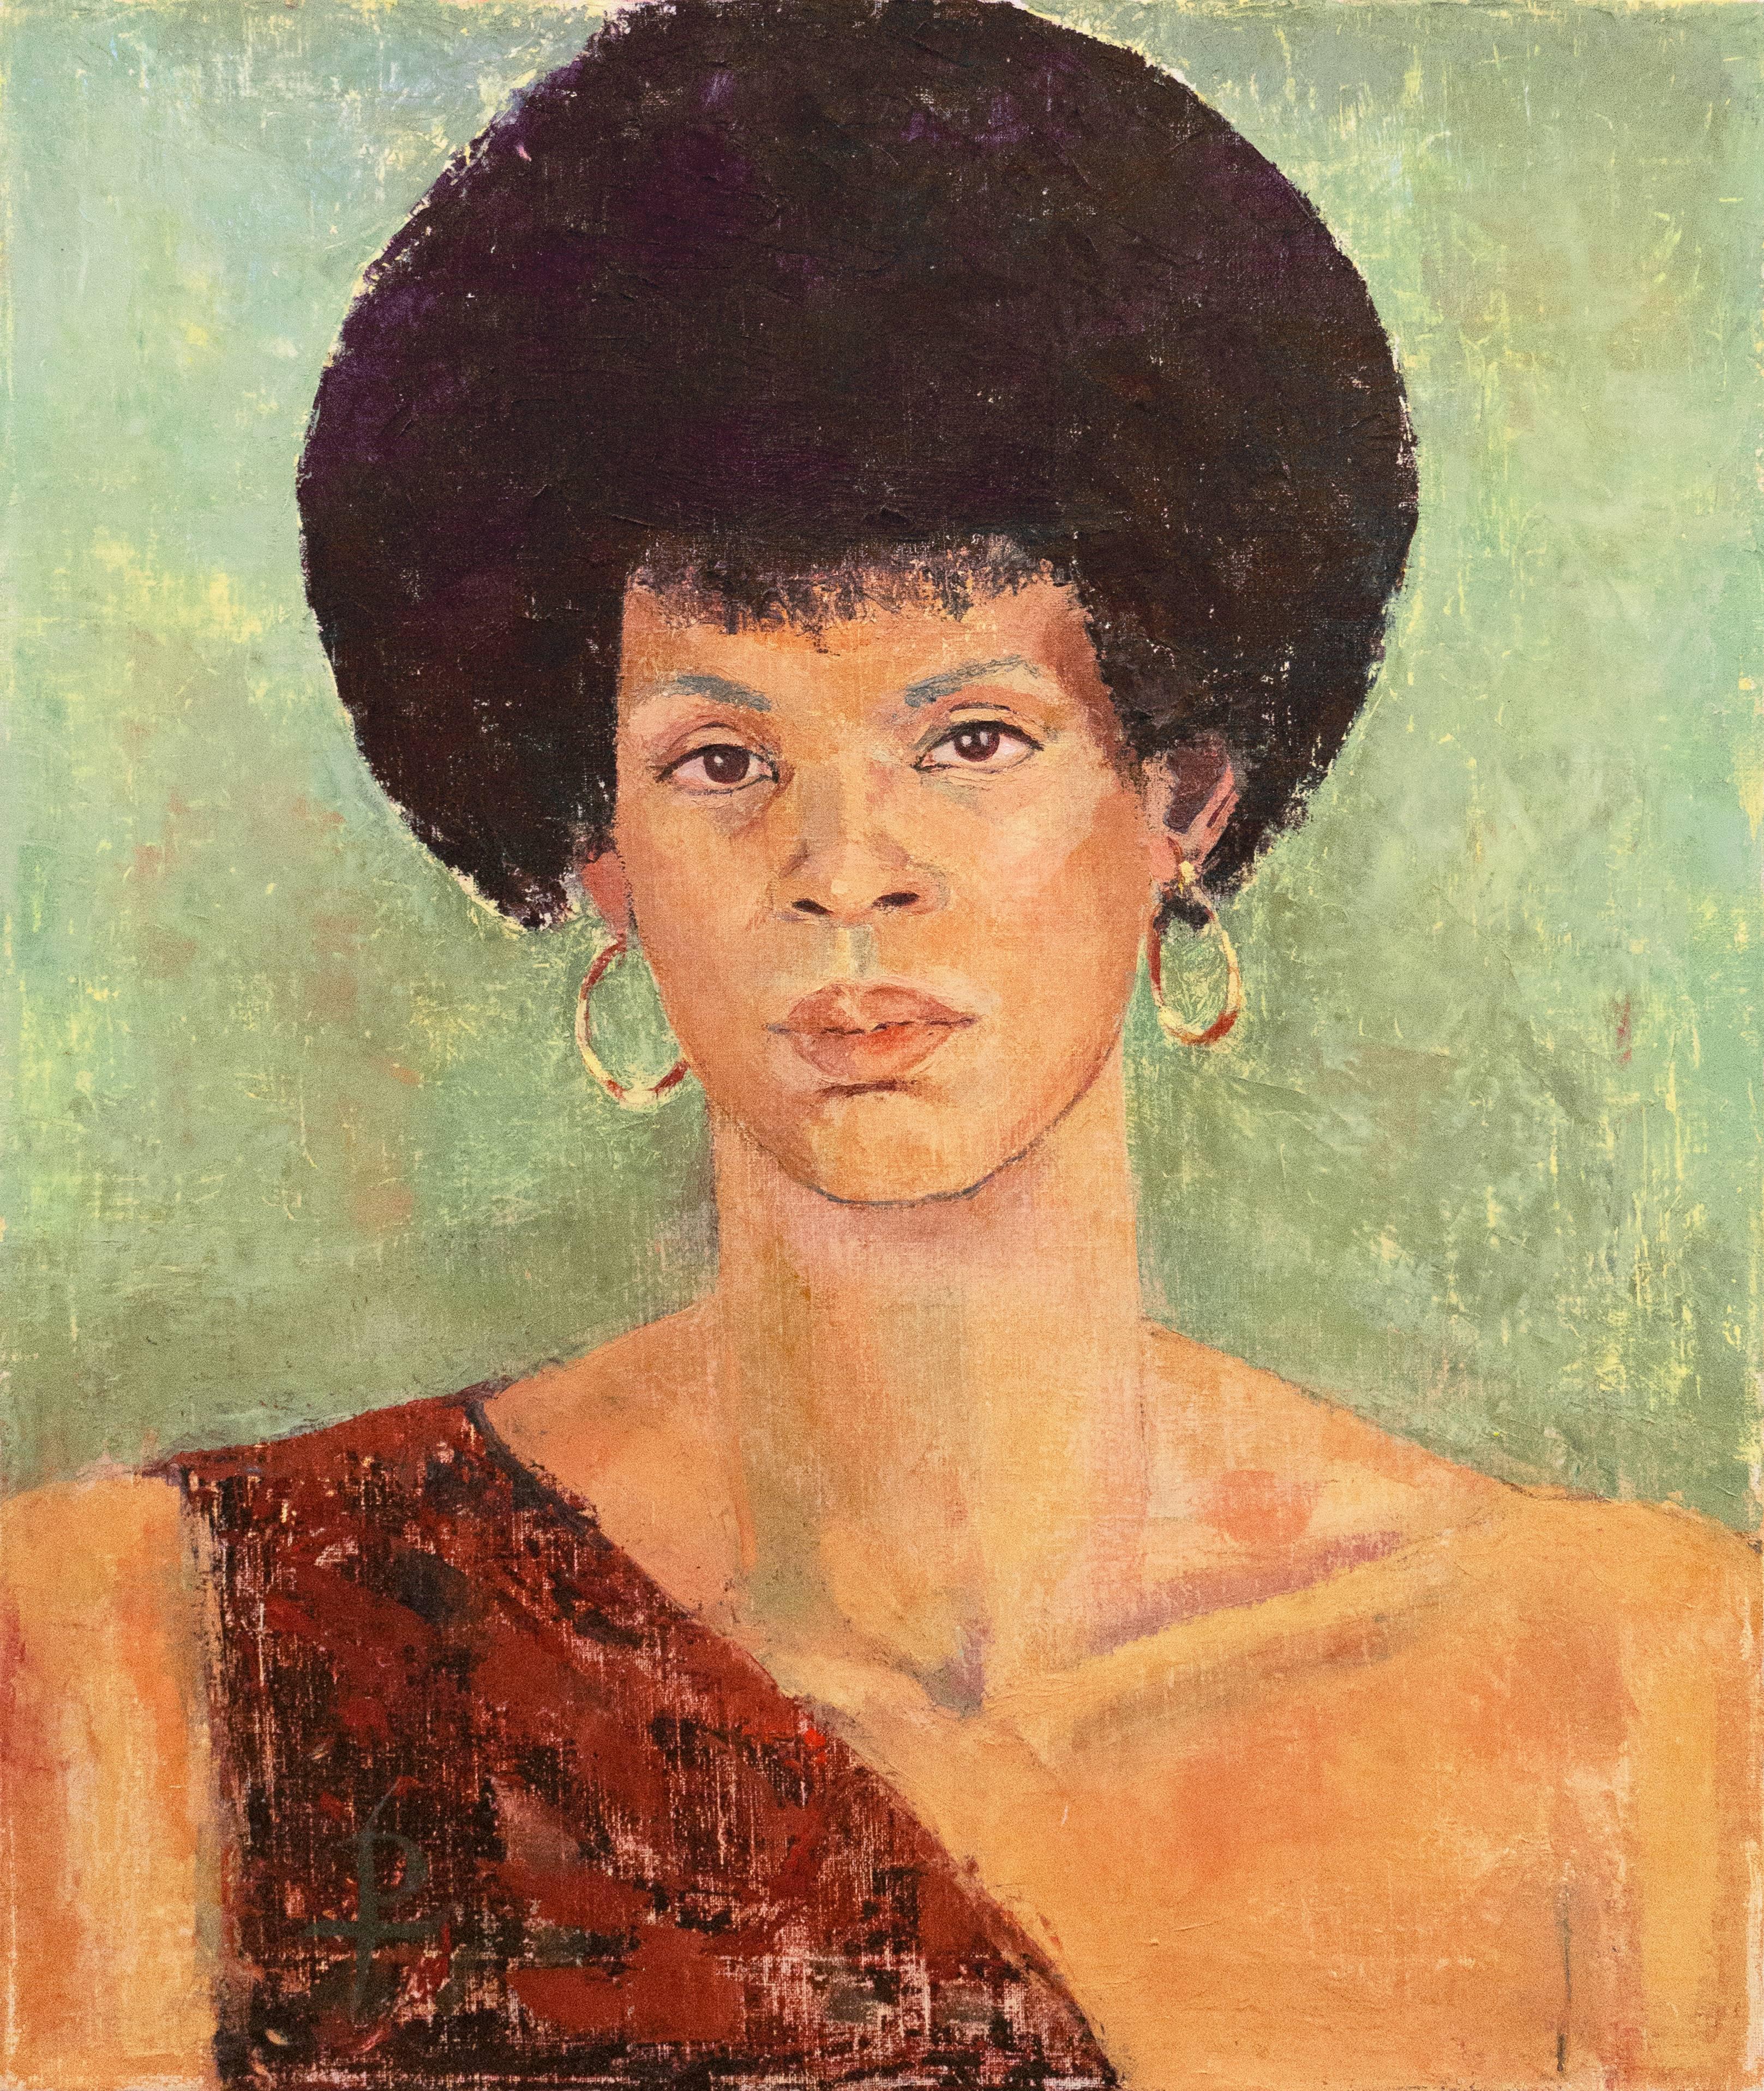 'Sheila Antoine with Afro', Sir John Cass, Otis Art Institute, California